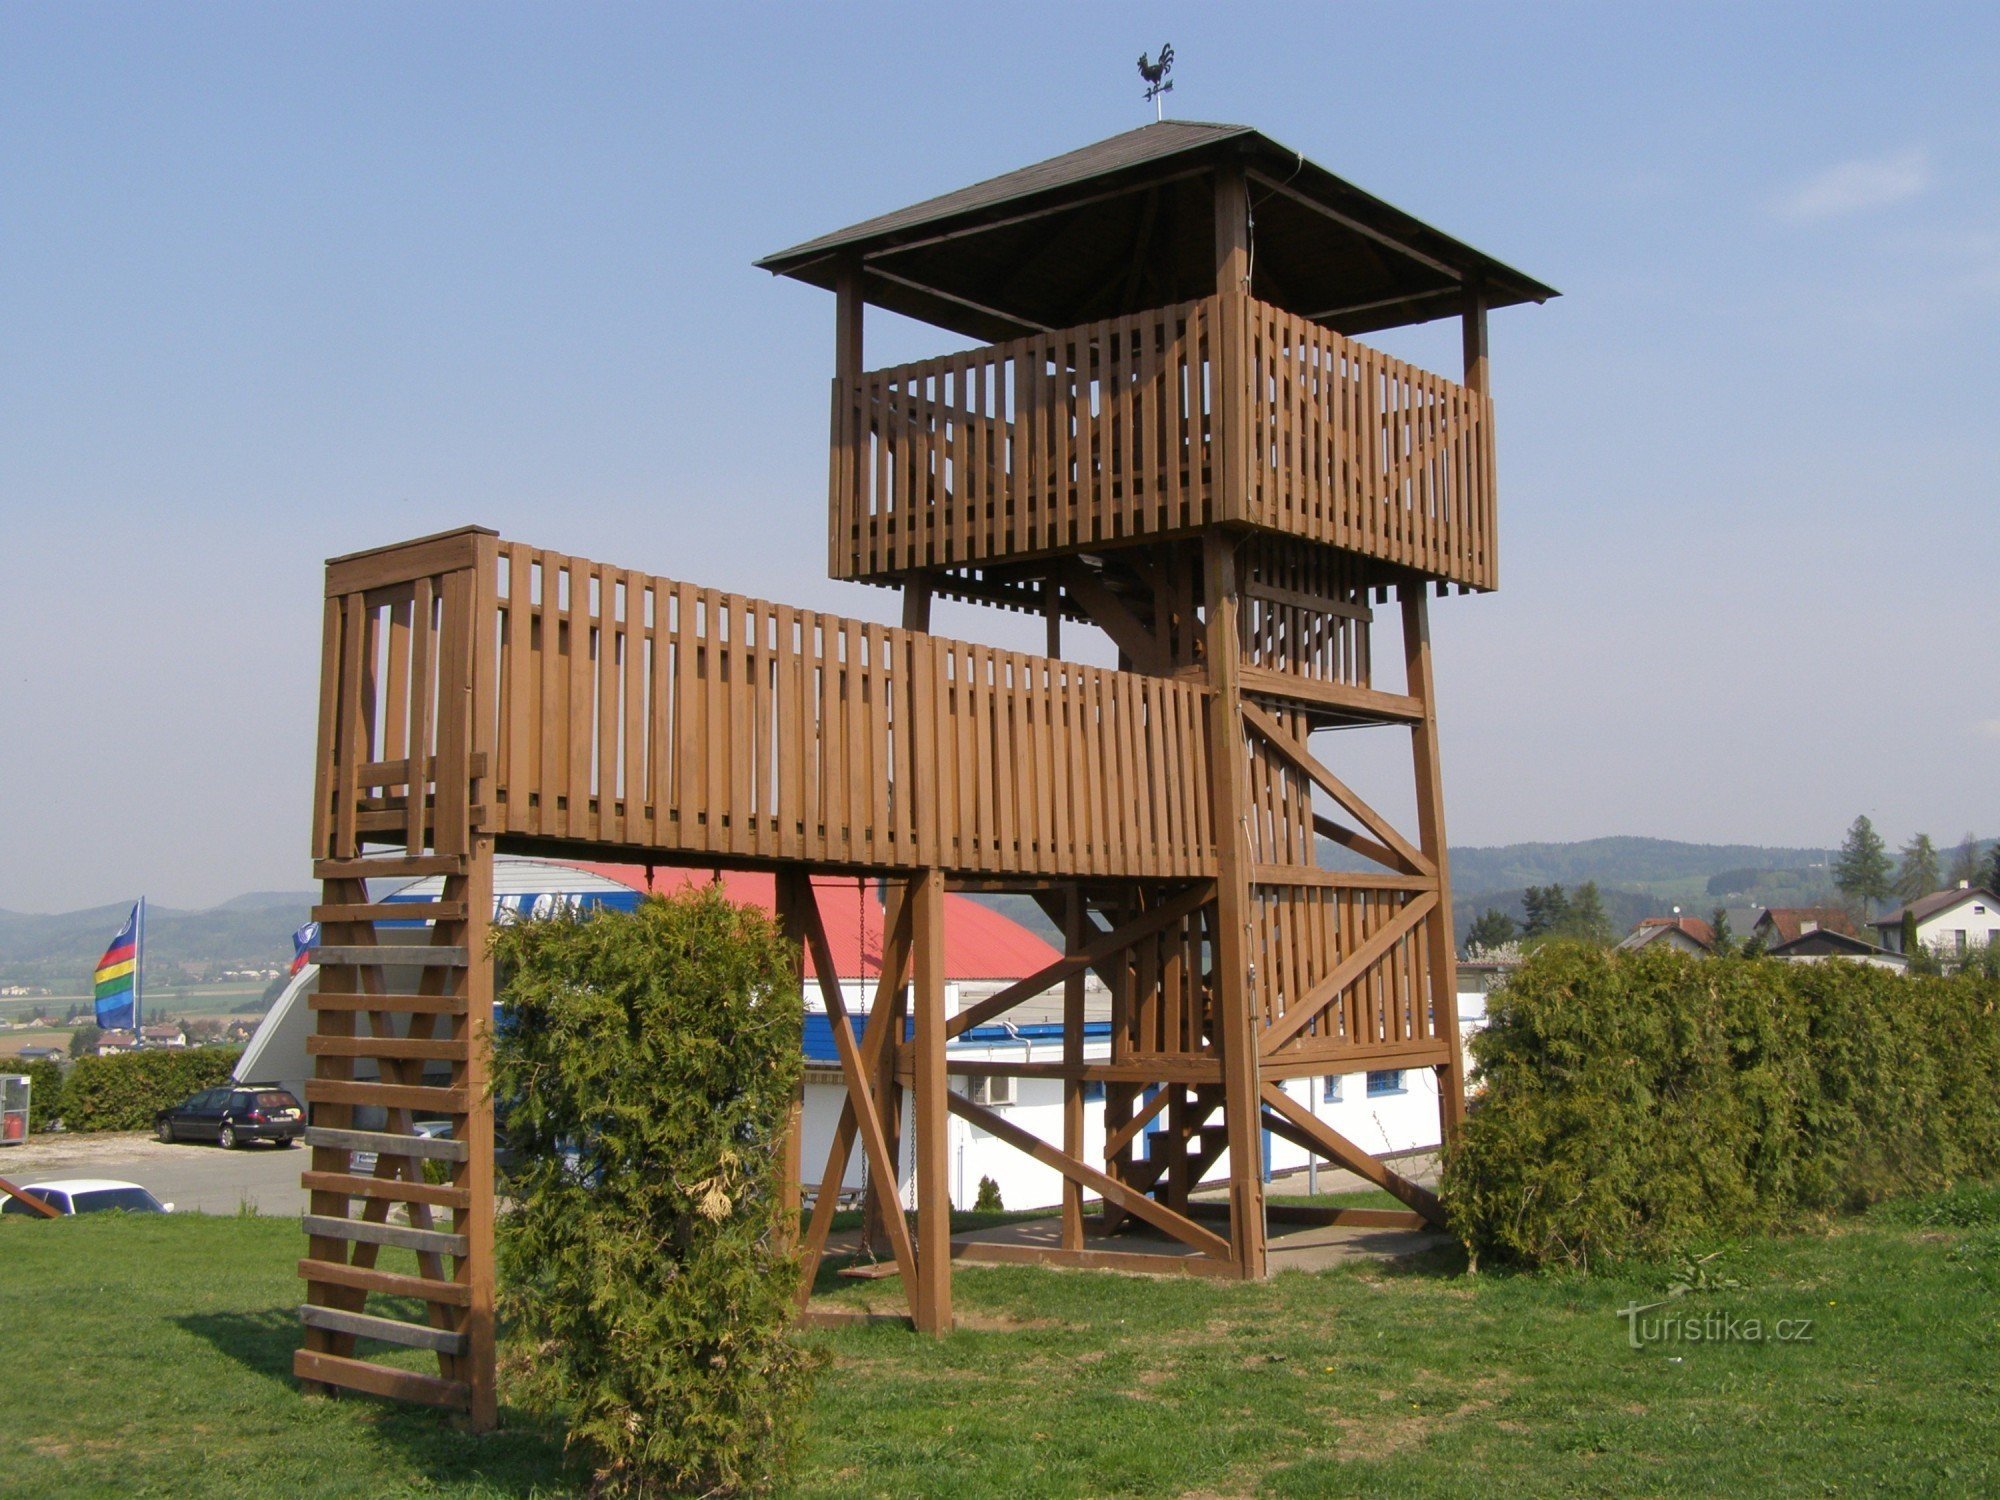 Podkrkonosí の Rtyn 近くの木製の展望台